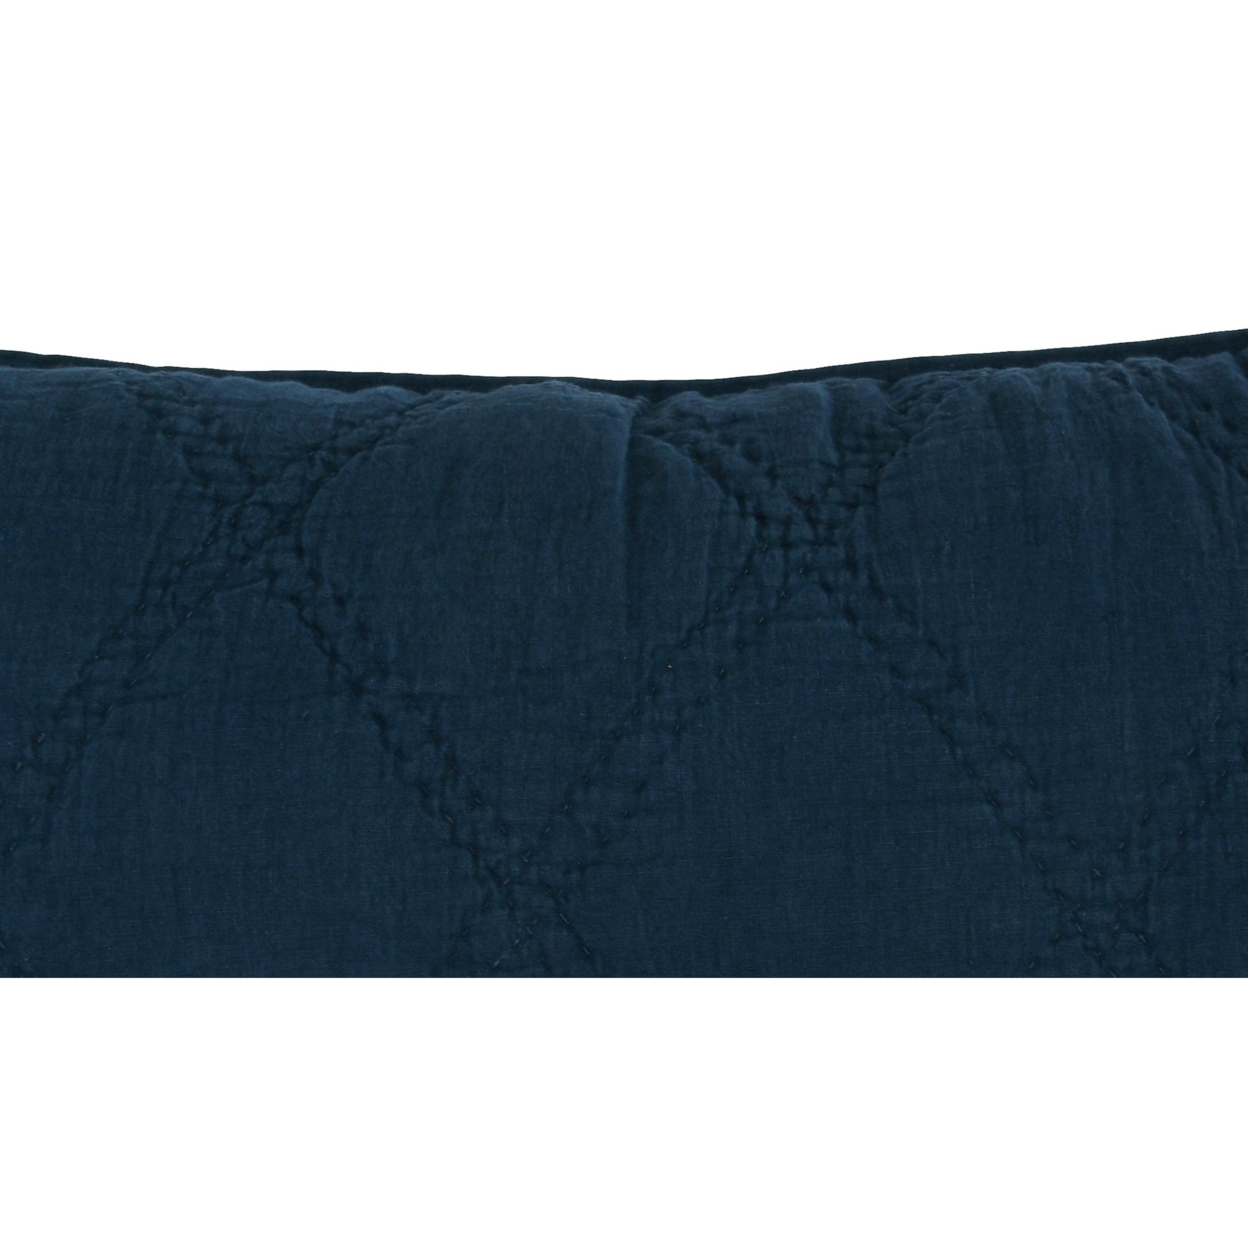 Hara 26 X 36 Hand Quilted Lumbar King Pillow Sham, Polyester Fill, Blue- Saltoro Sherpi